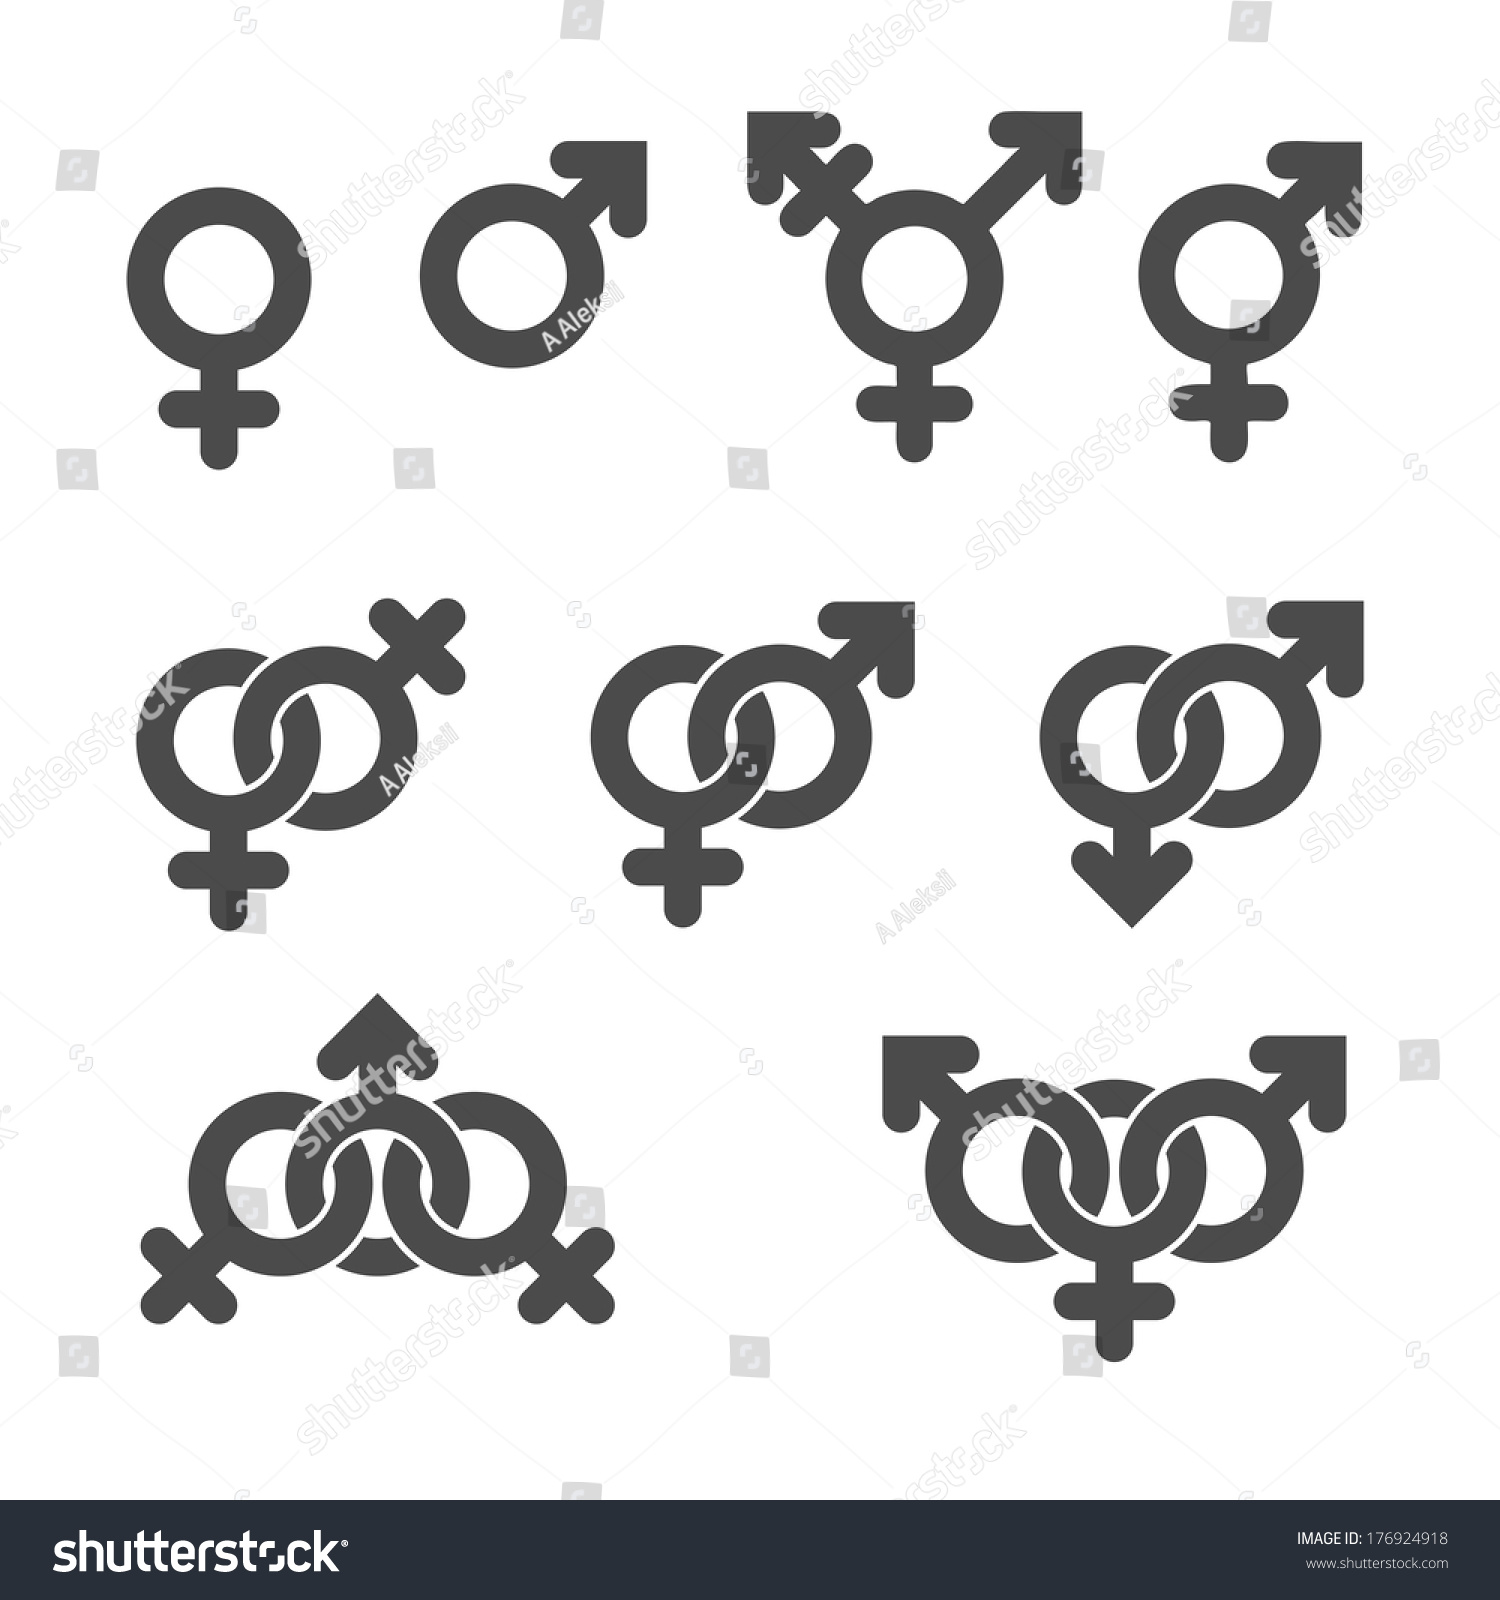 Gender Symbol Icons Graphic Vector Elements Set 176924918 Shutterstock